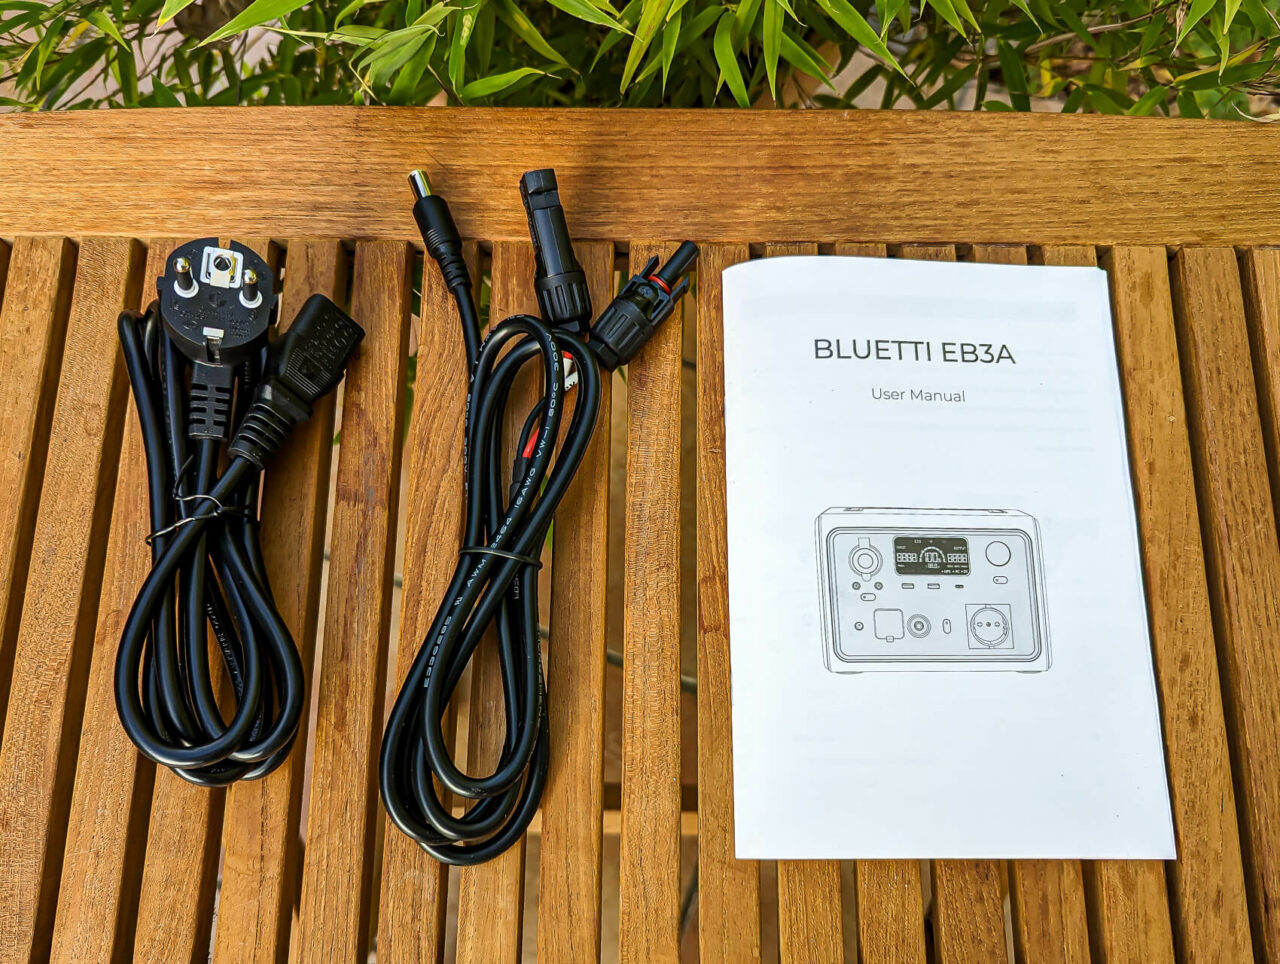 Bluetti EB3A - Zubehör, Lieferumfang, Netzkabel, Solaradapter, Handbuch